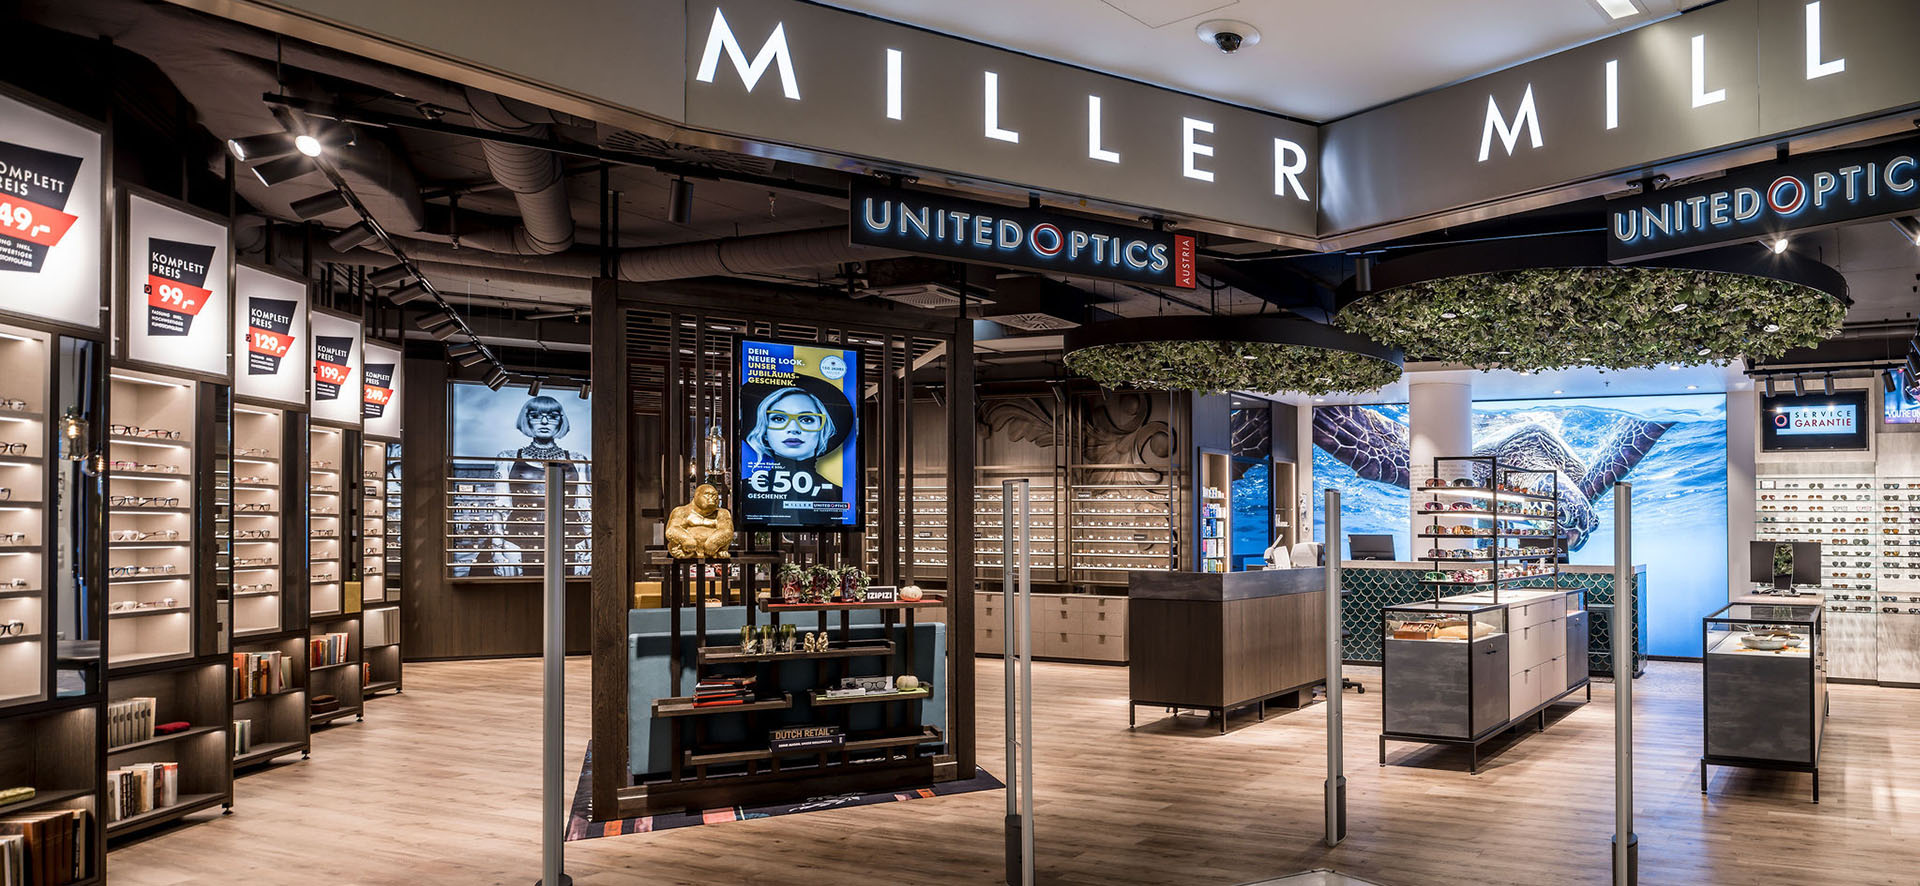 Miller United Optics | Innsbruck (AT) - Optiek